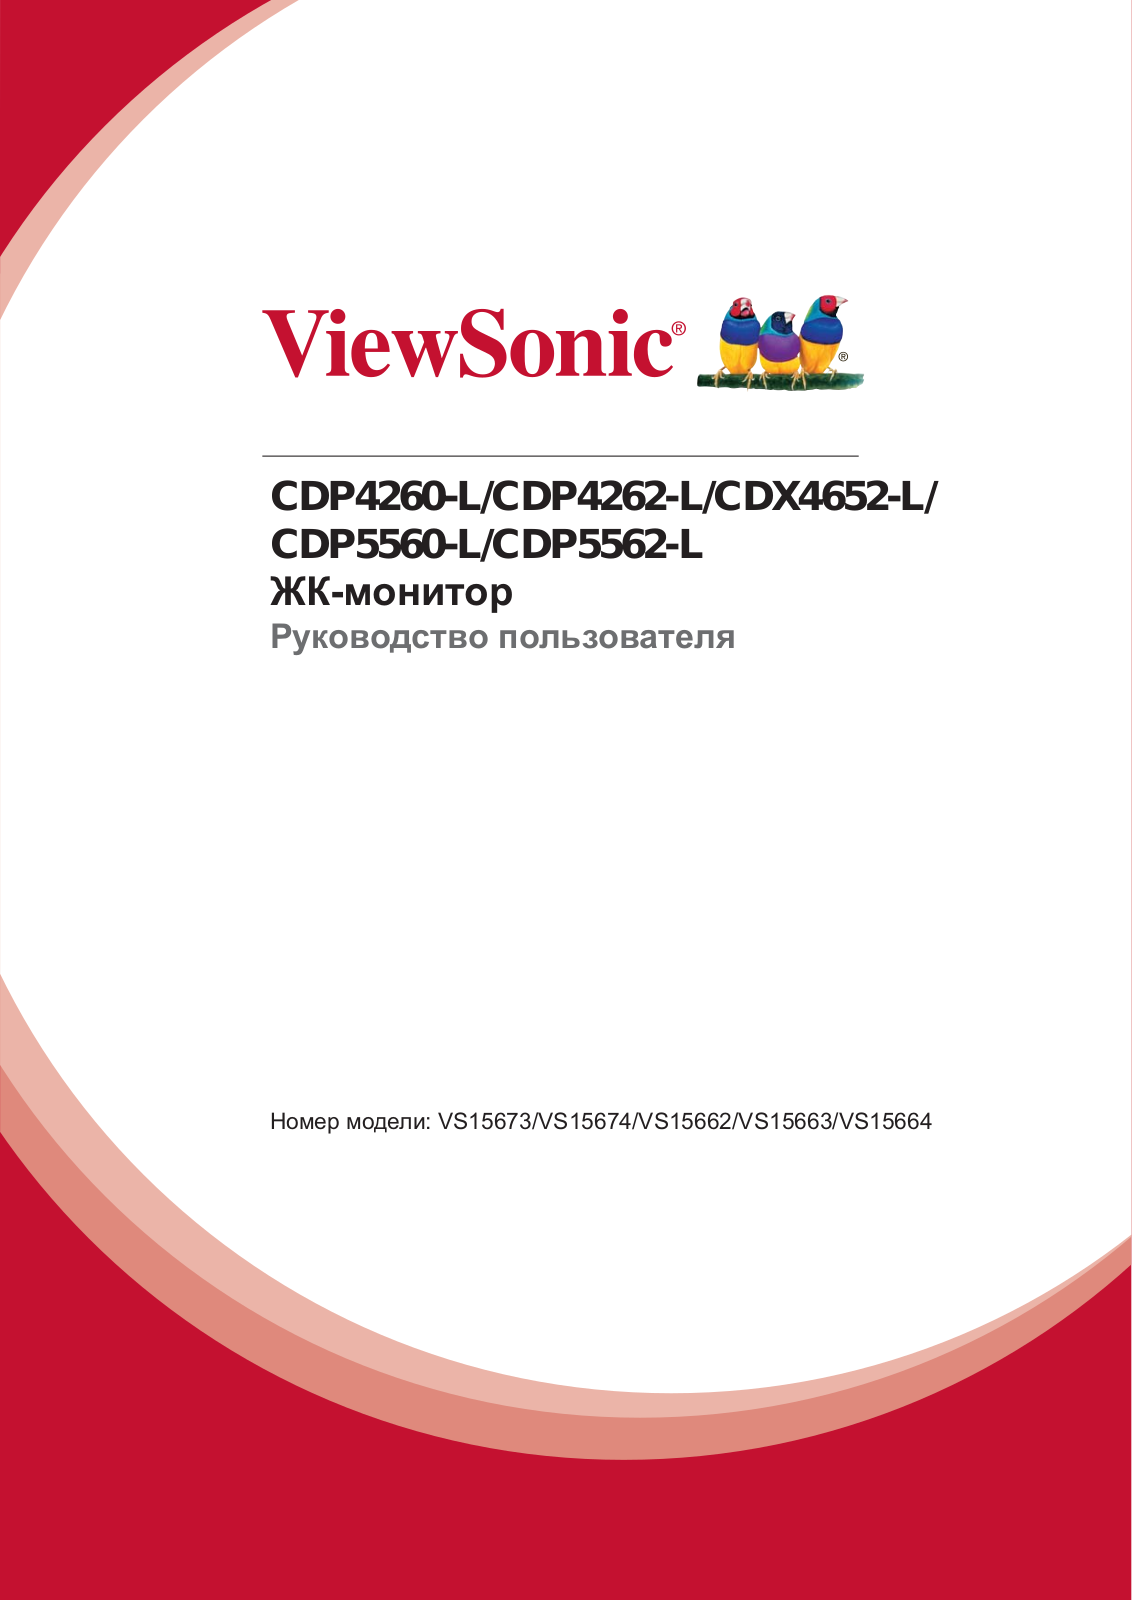 Viewsonic CDP4260-L, CDP4262-L, CDX4652-L, CDP5560-L, CDP5562-L User Manual